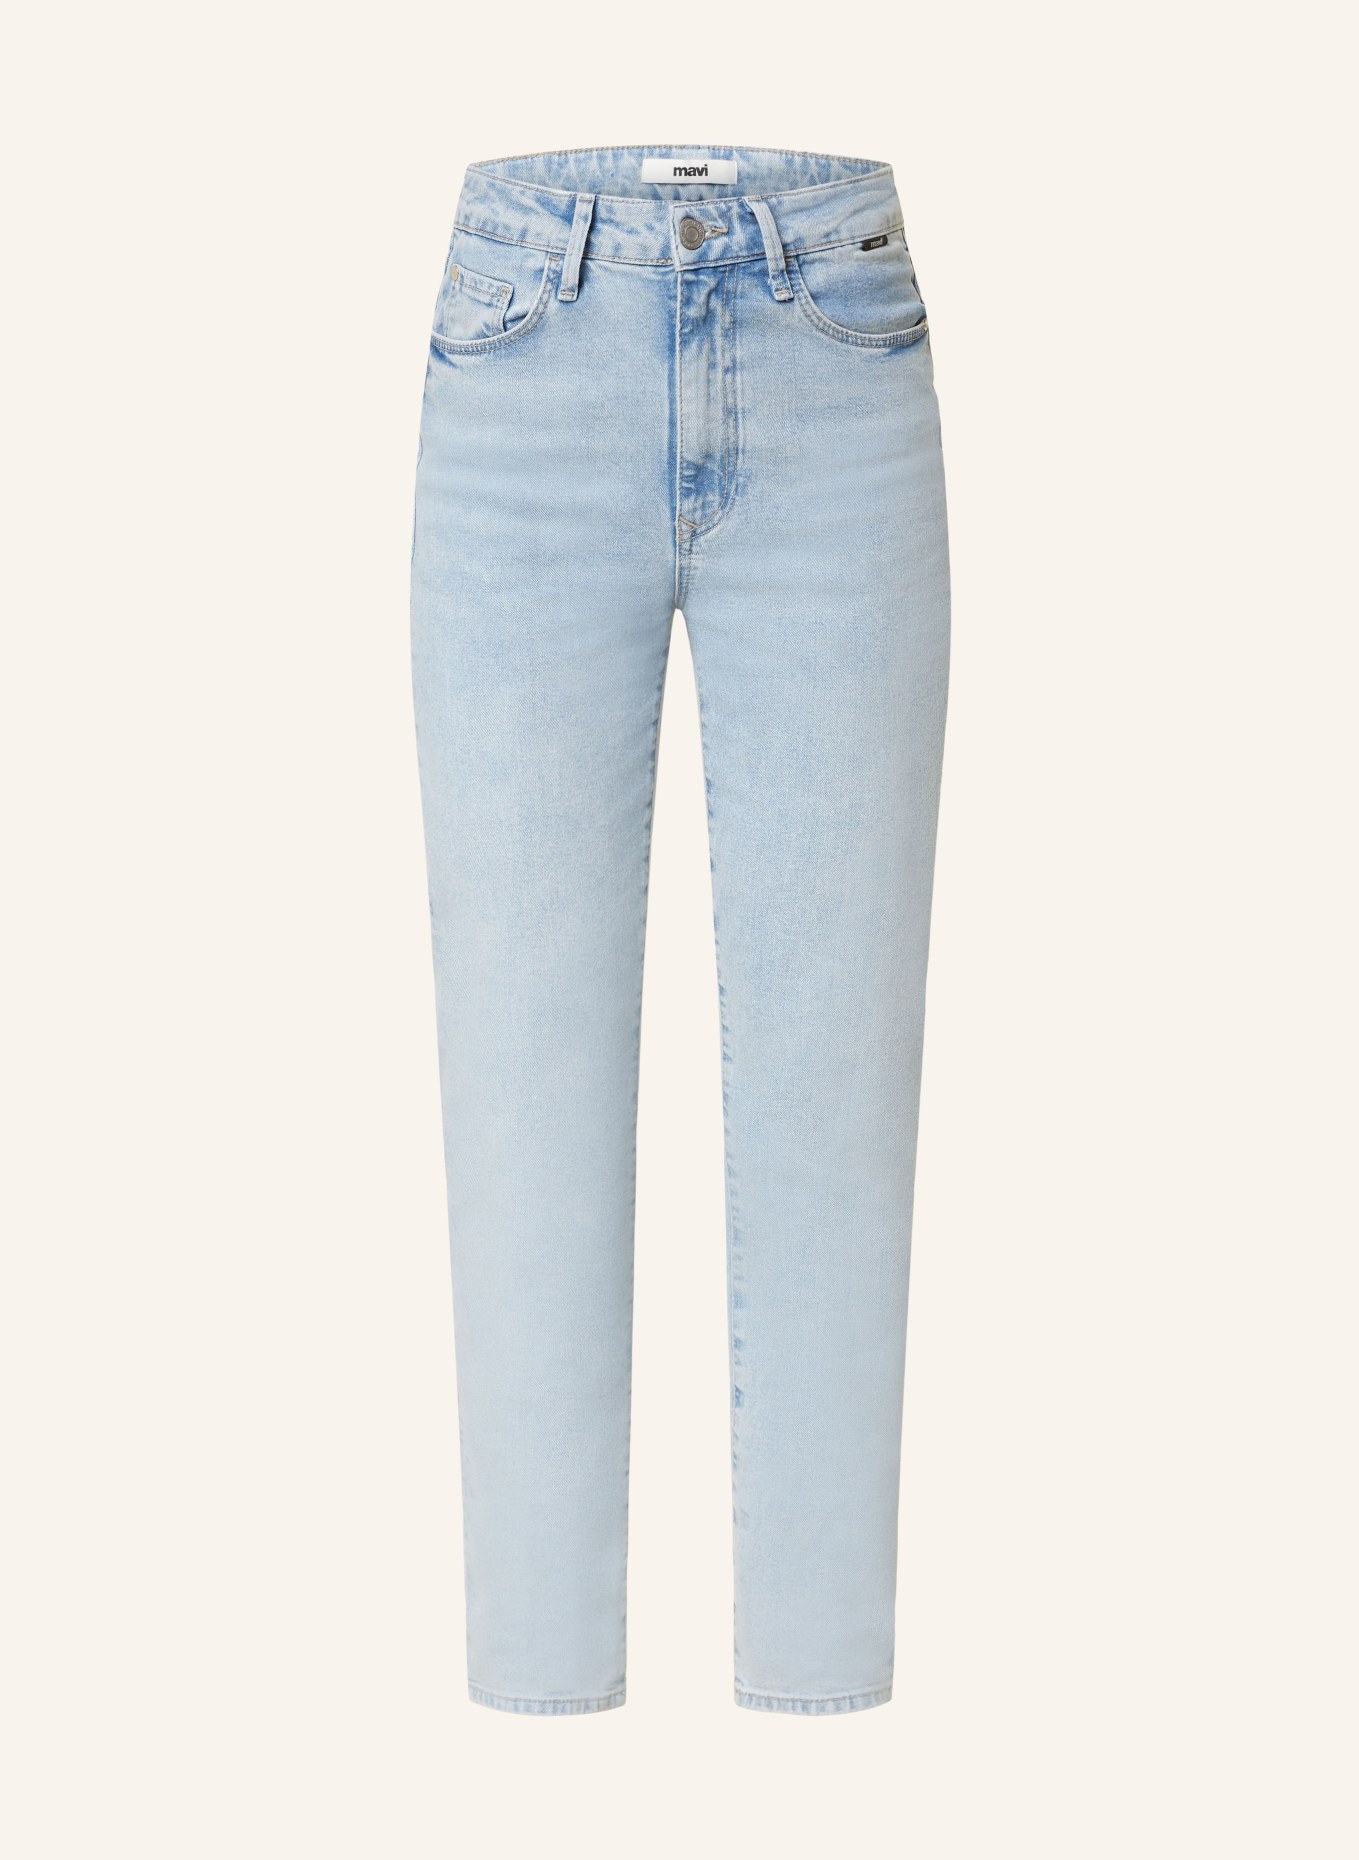 mavi Boyfriend Jeans STAR, Farbe: 85702 bleach 90s (Bild 1)